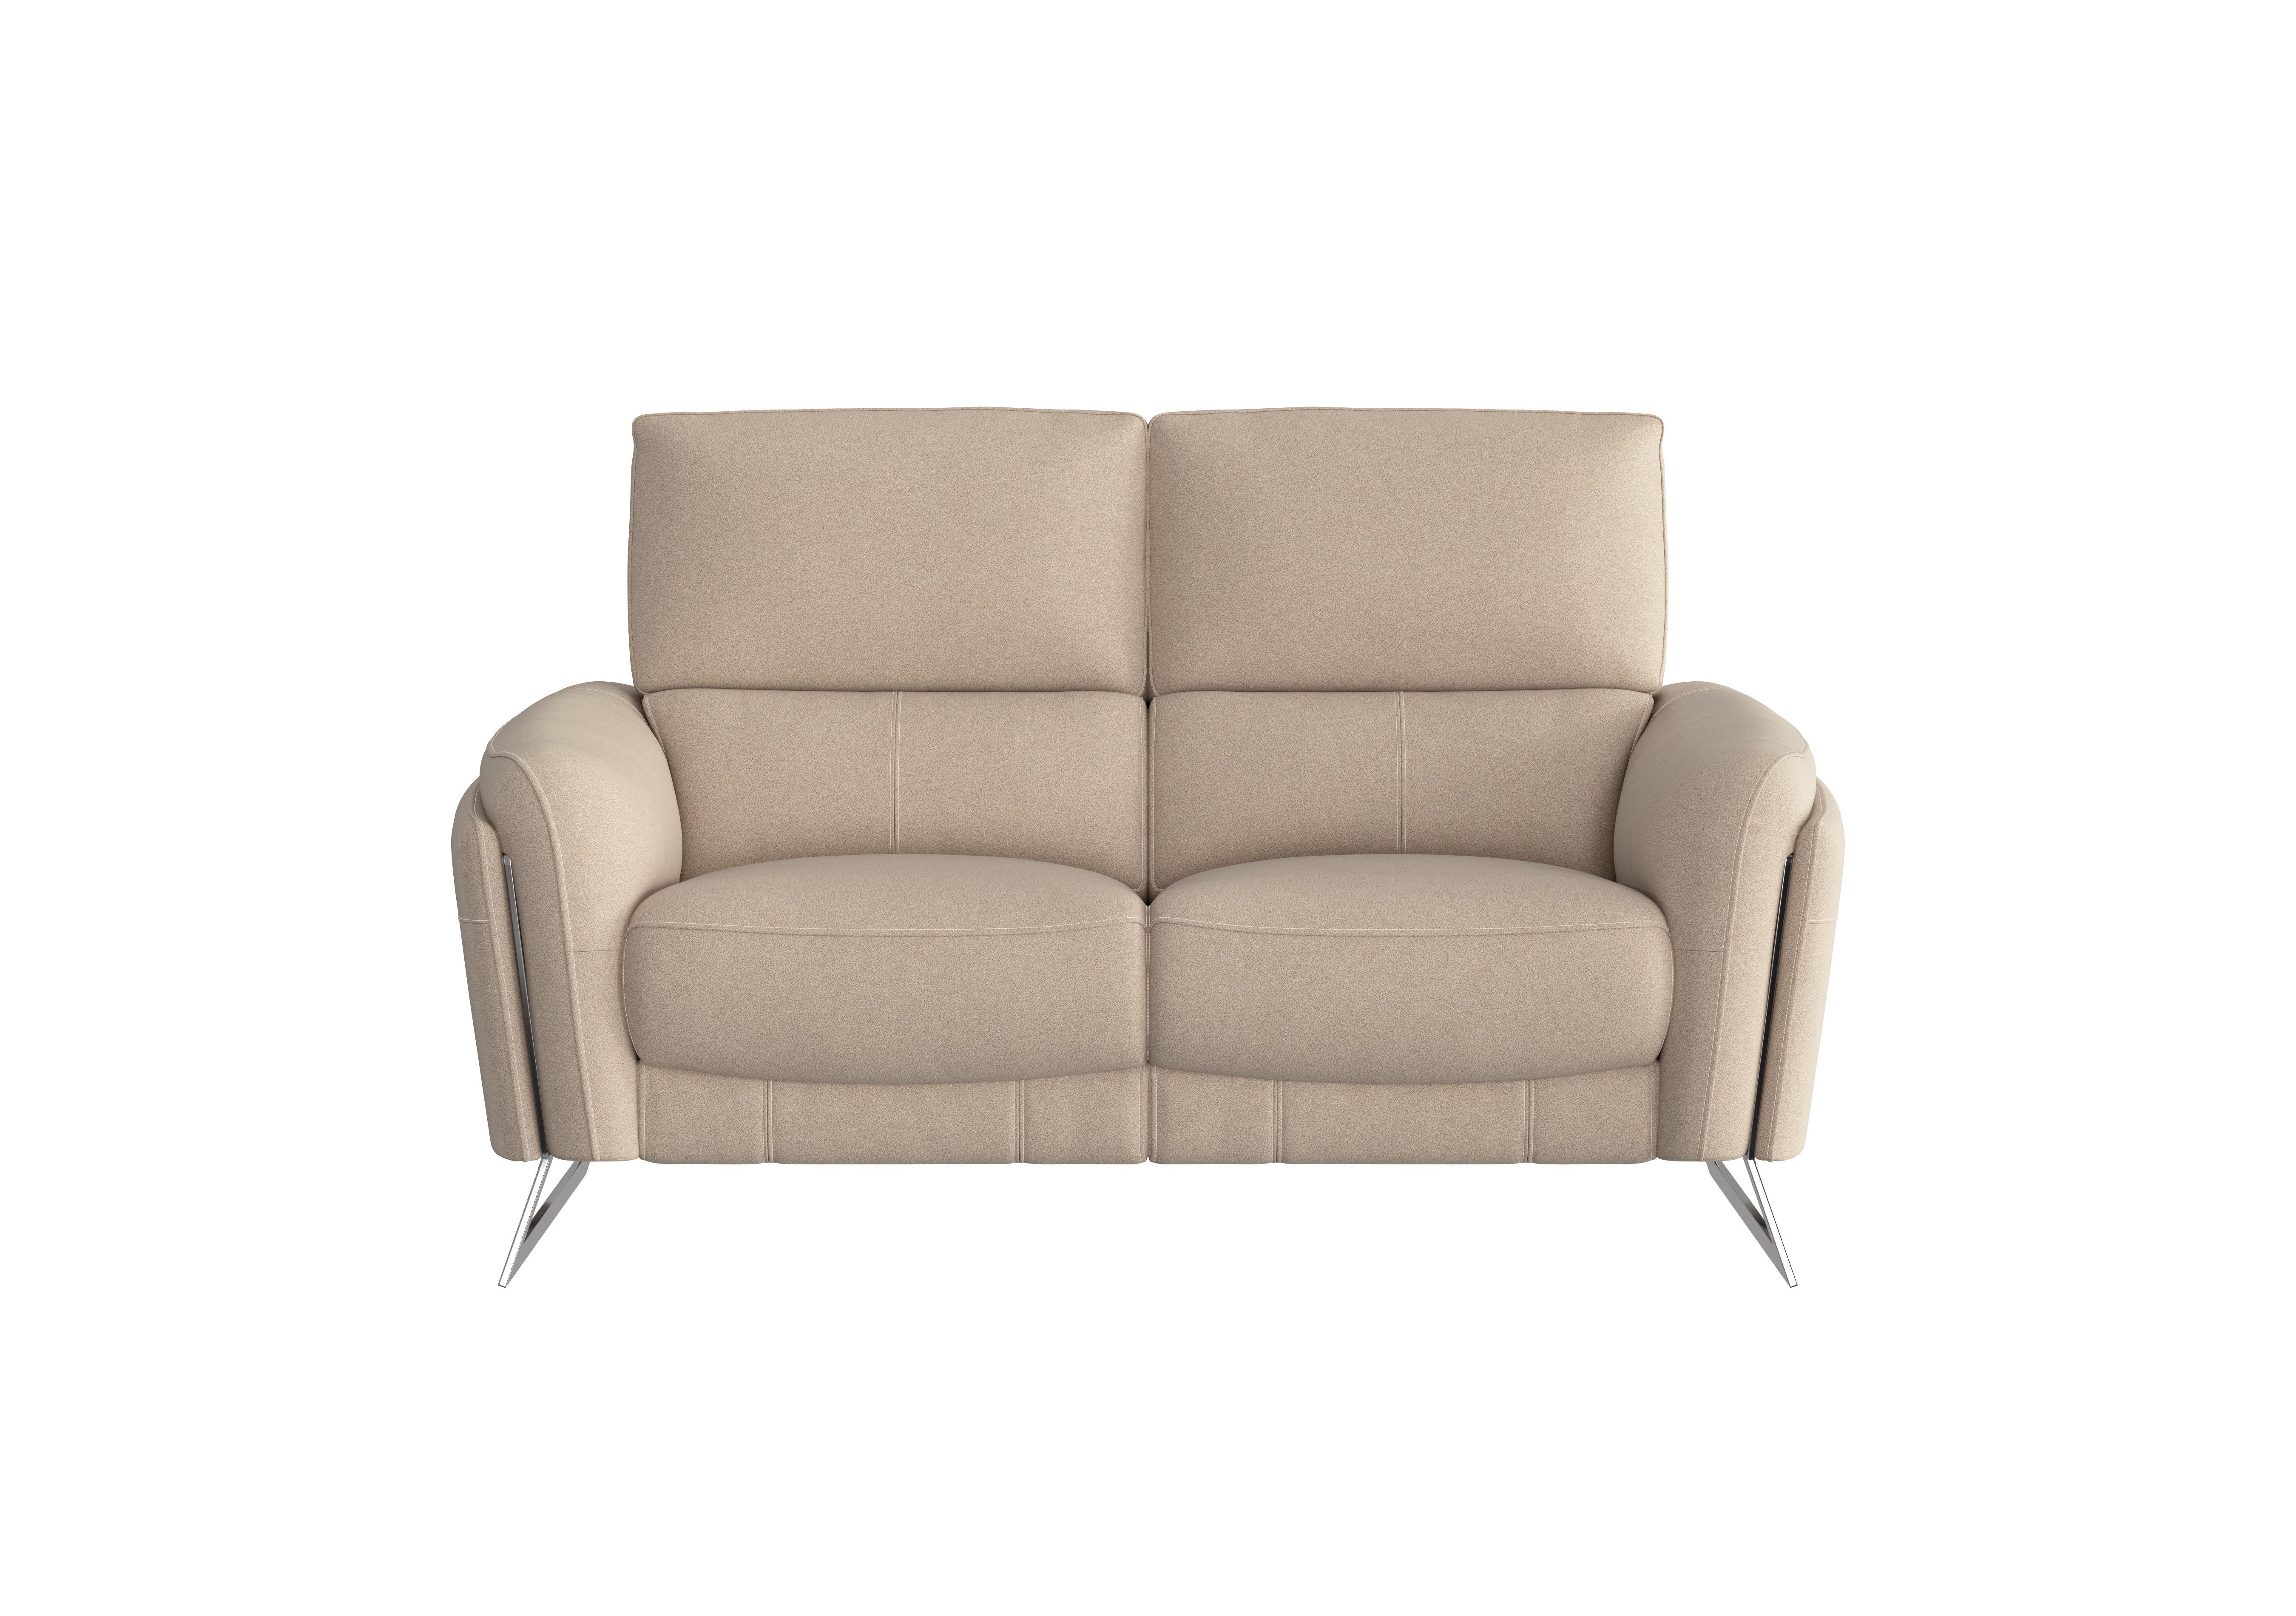 Amarilla 2 Seater Fabric Sofa in Bfa-Blj-R20 Bisque on Furniture Village